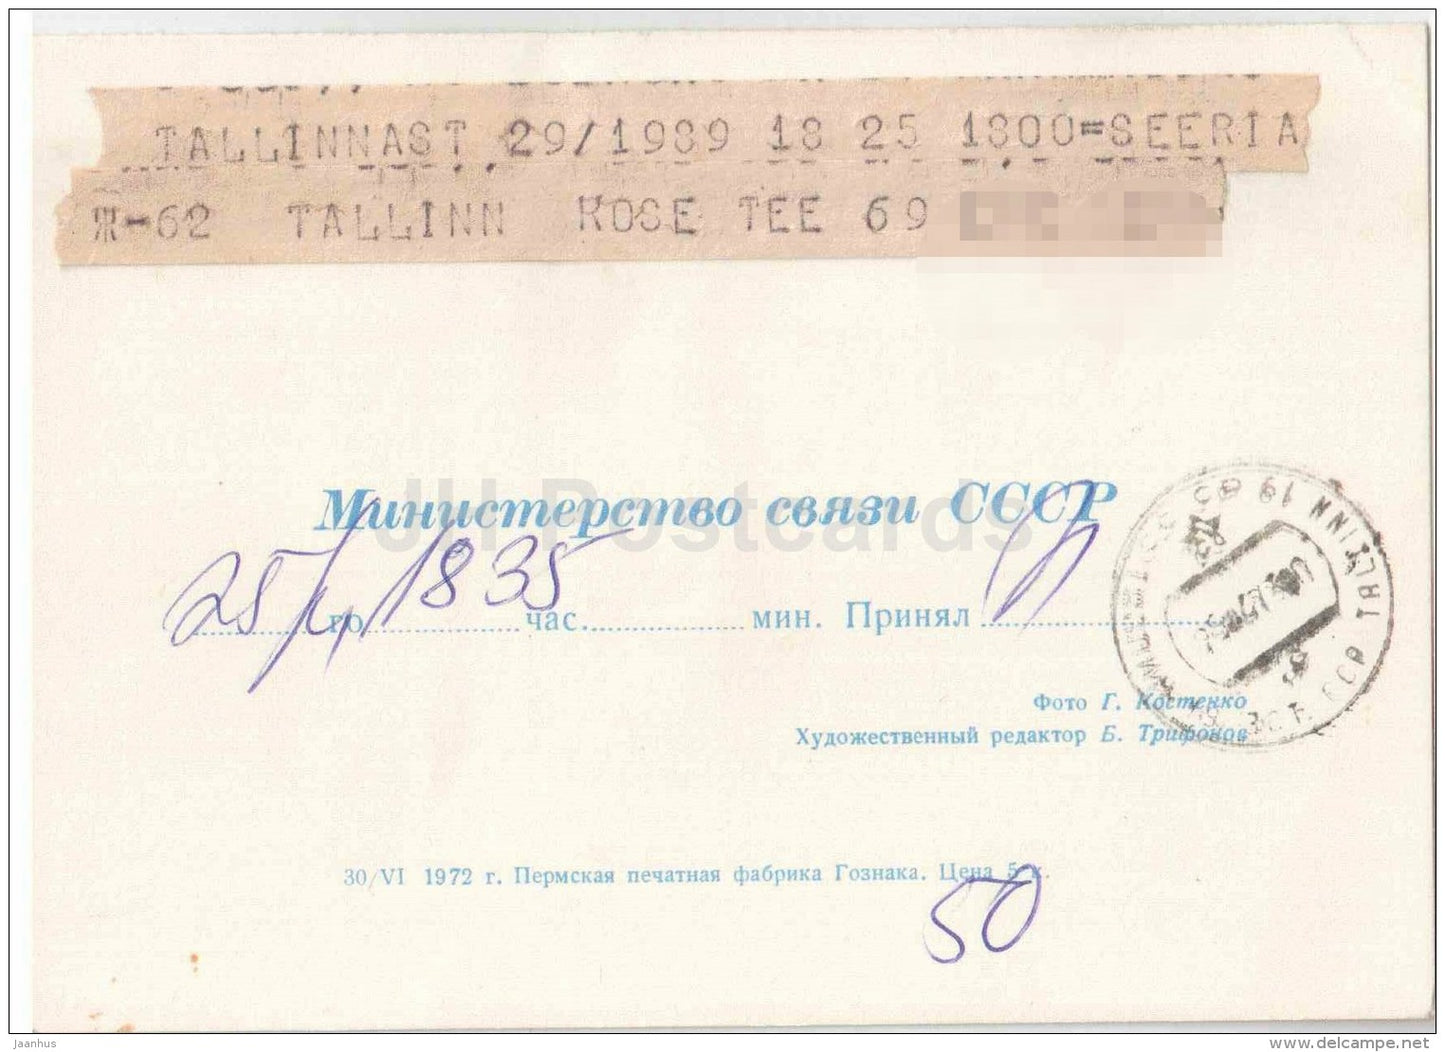 greeting card - Gladiolus - flowers - telegram - 1972 - Russia USSR - used - JH Postcards